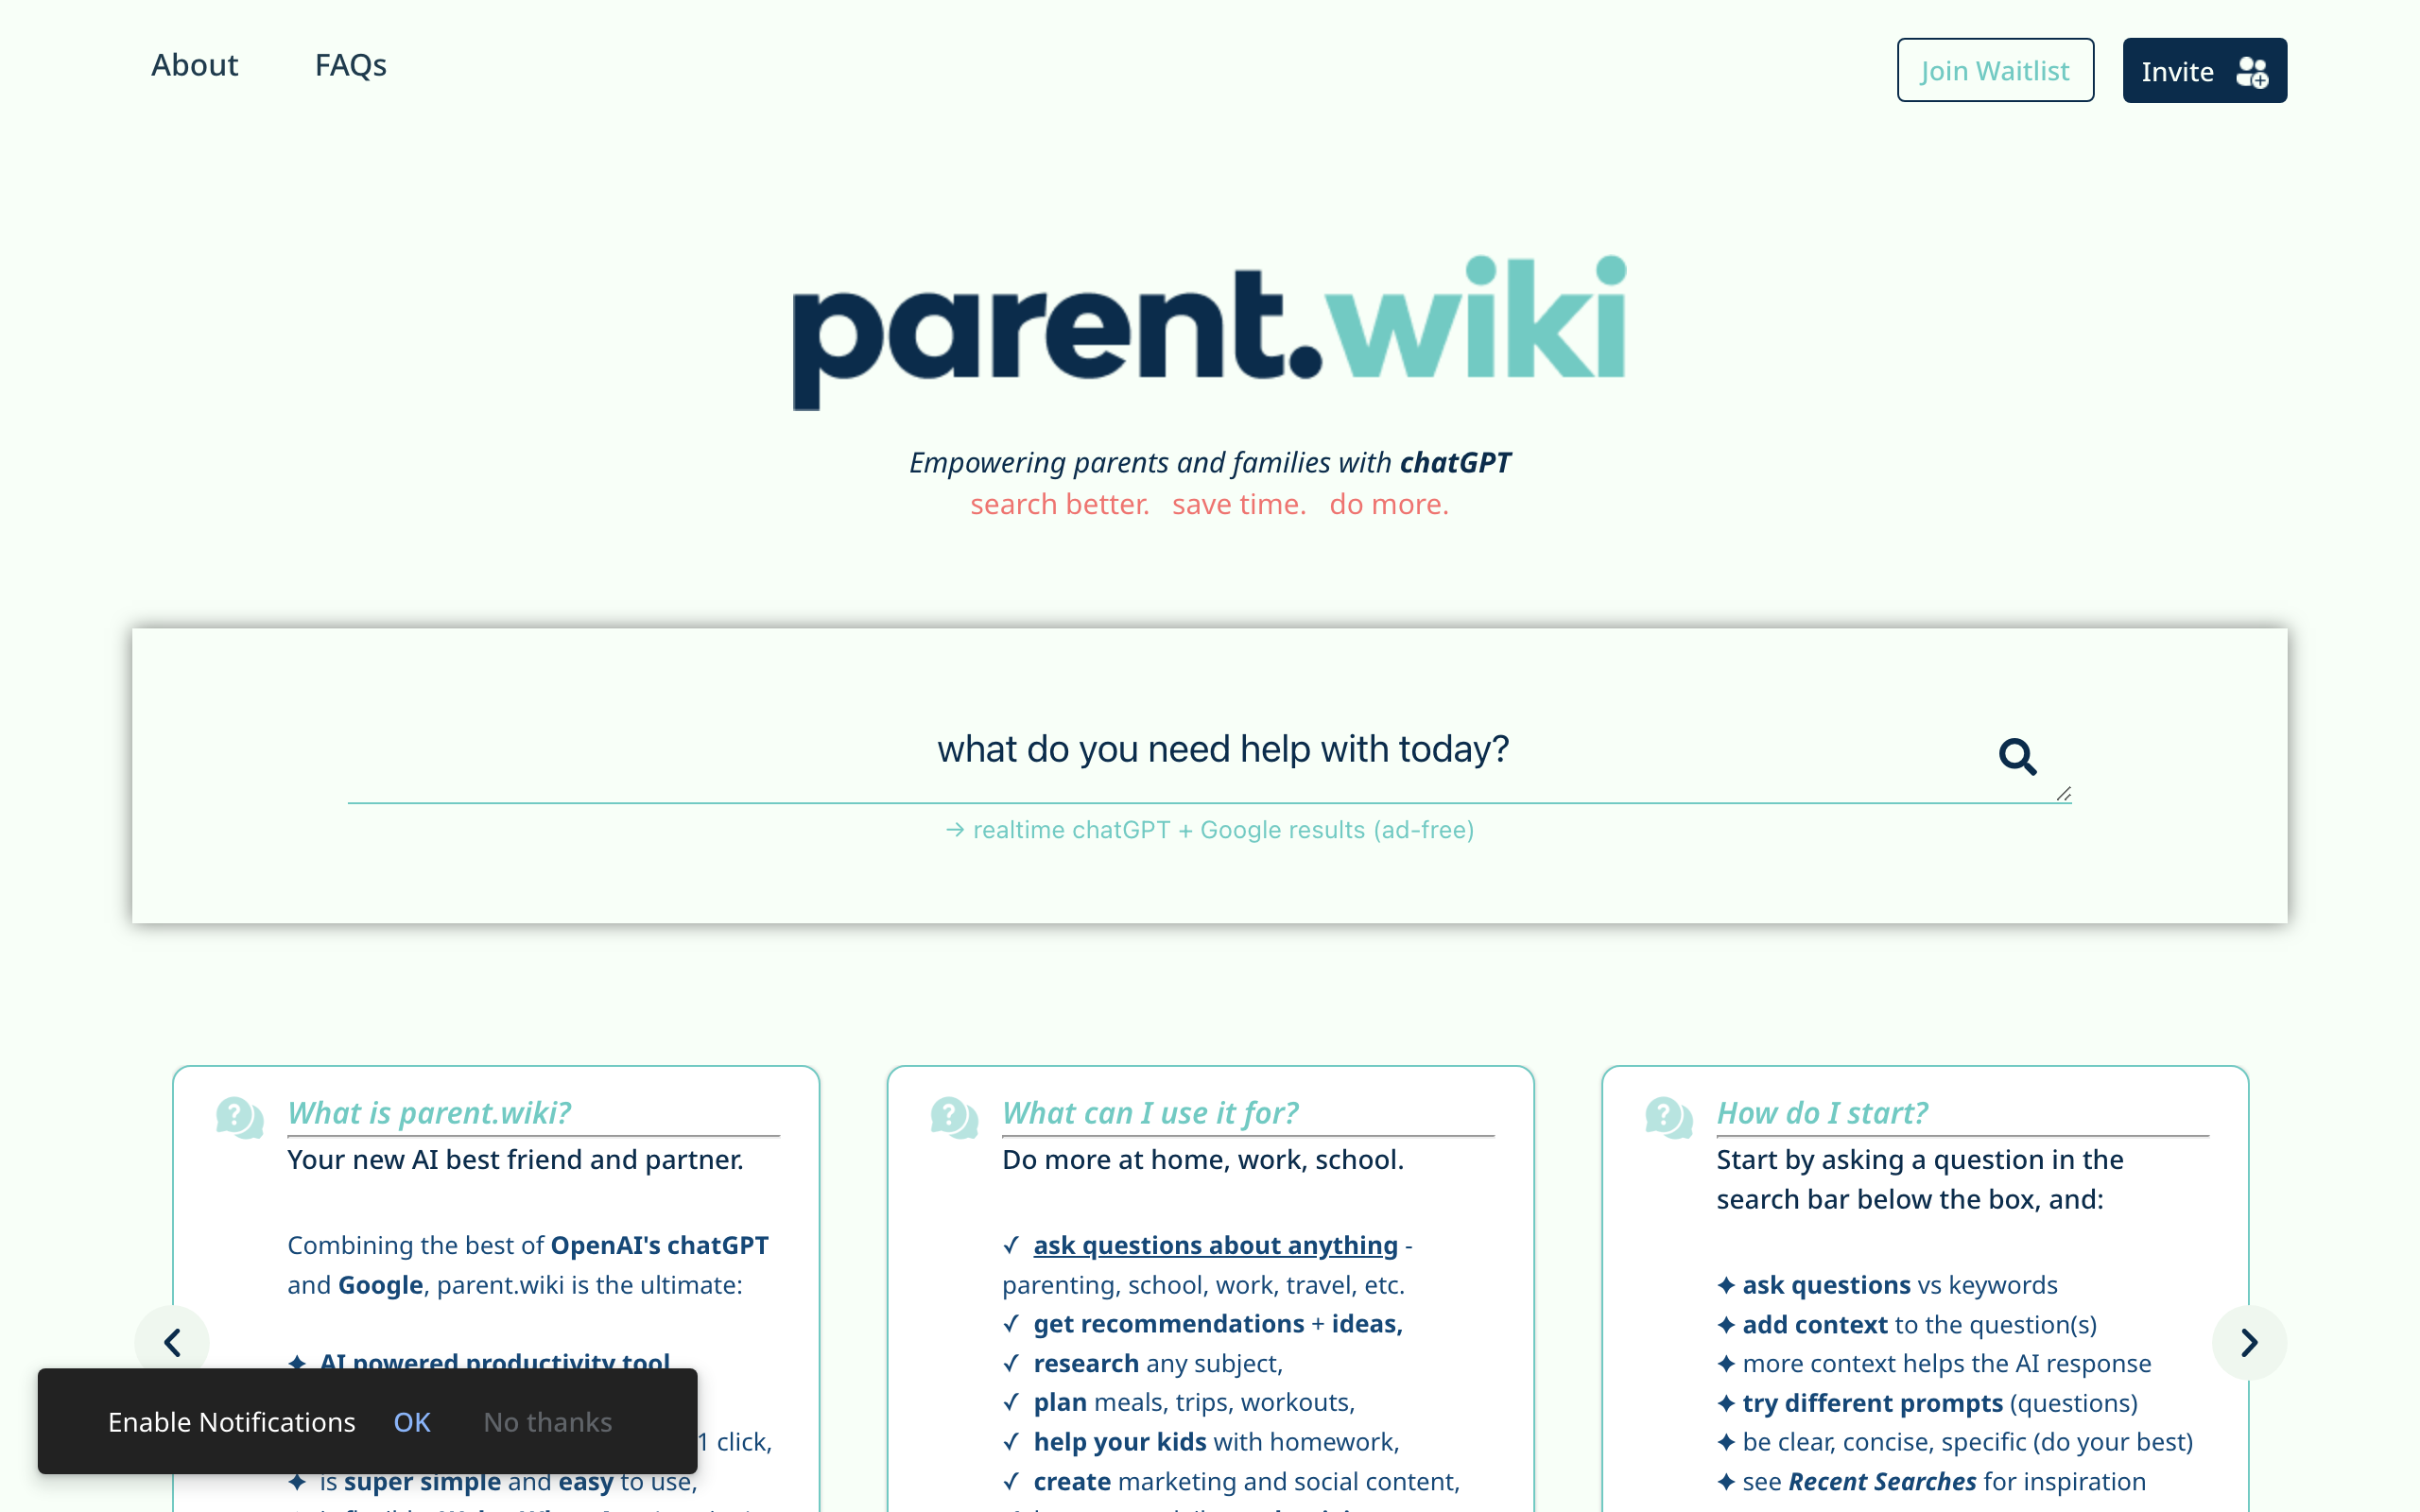 Parent.wiki